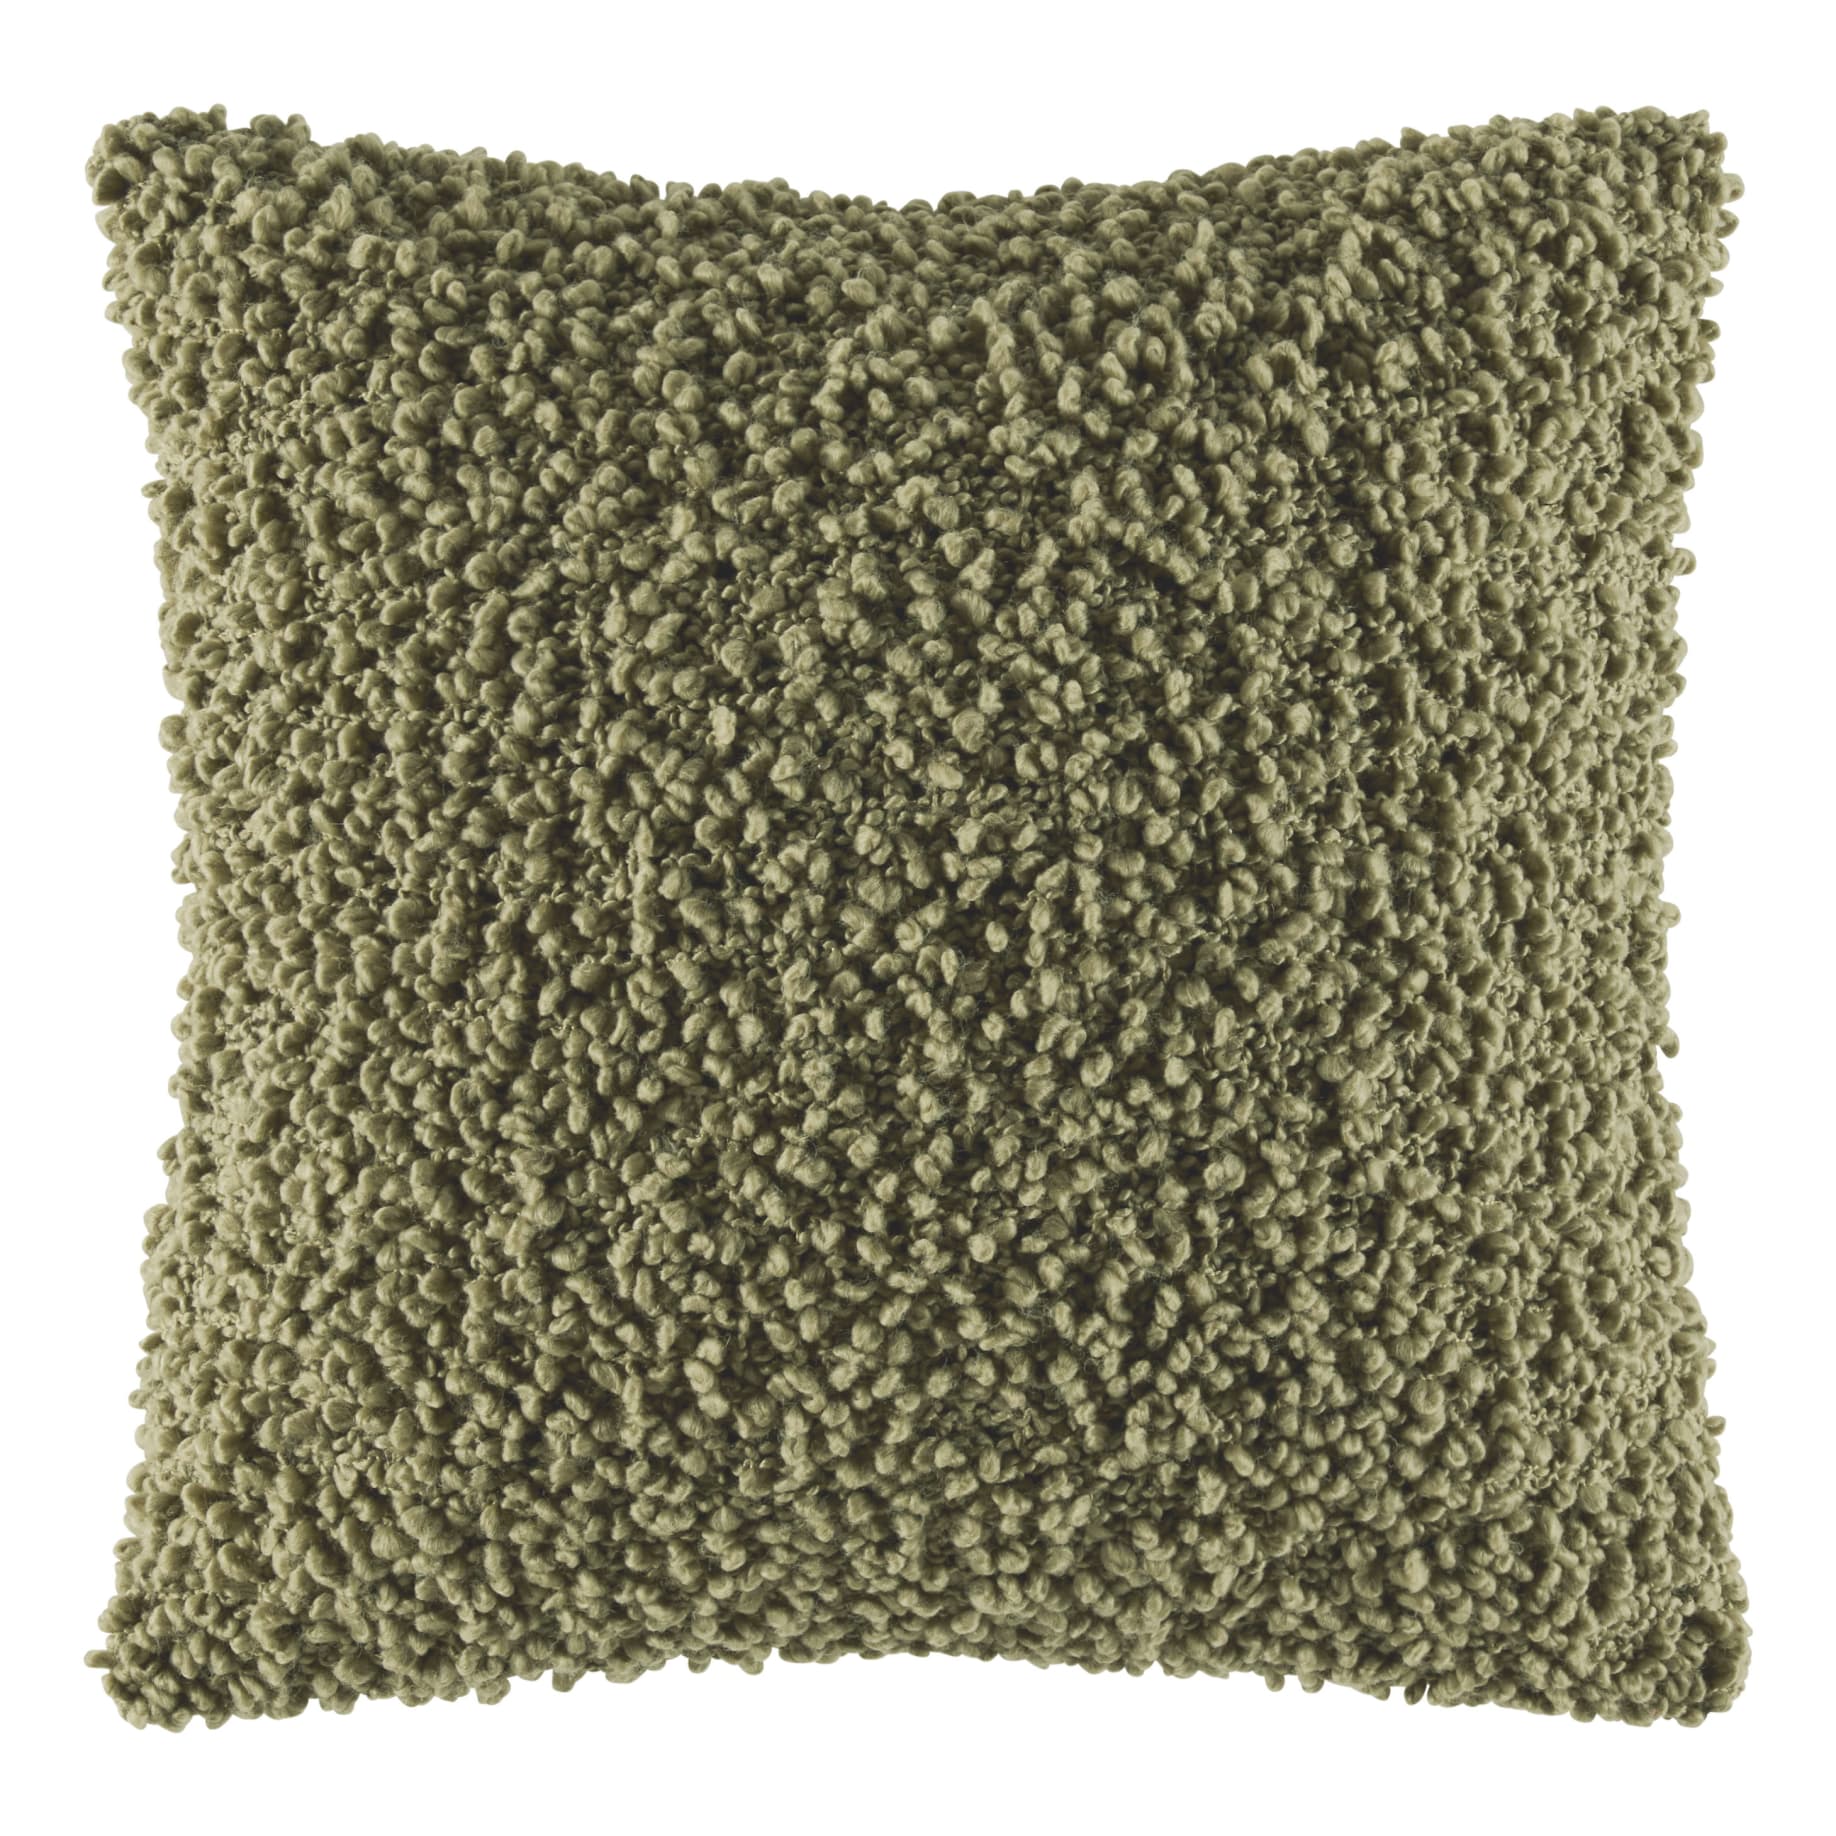 Rye Cushion 50x50cm in Moss